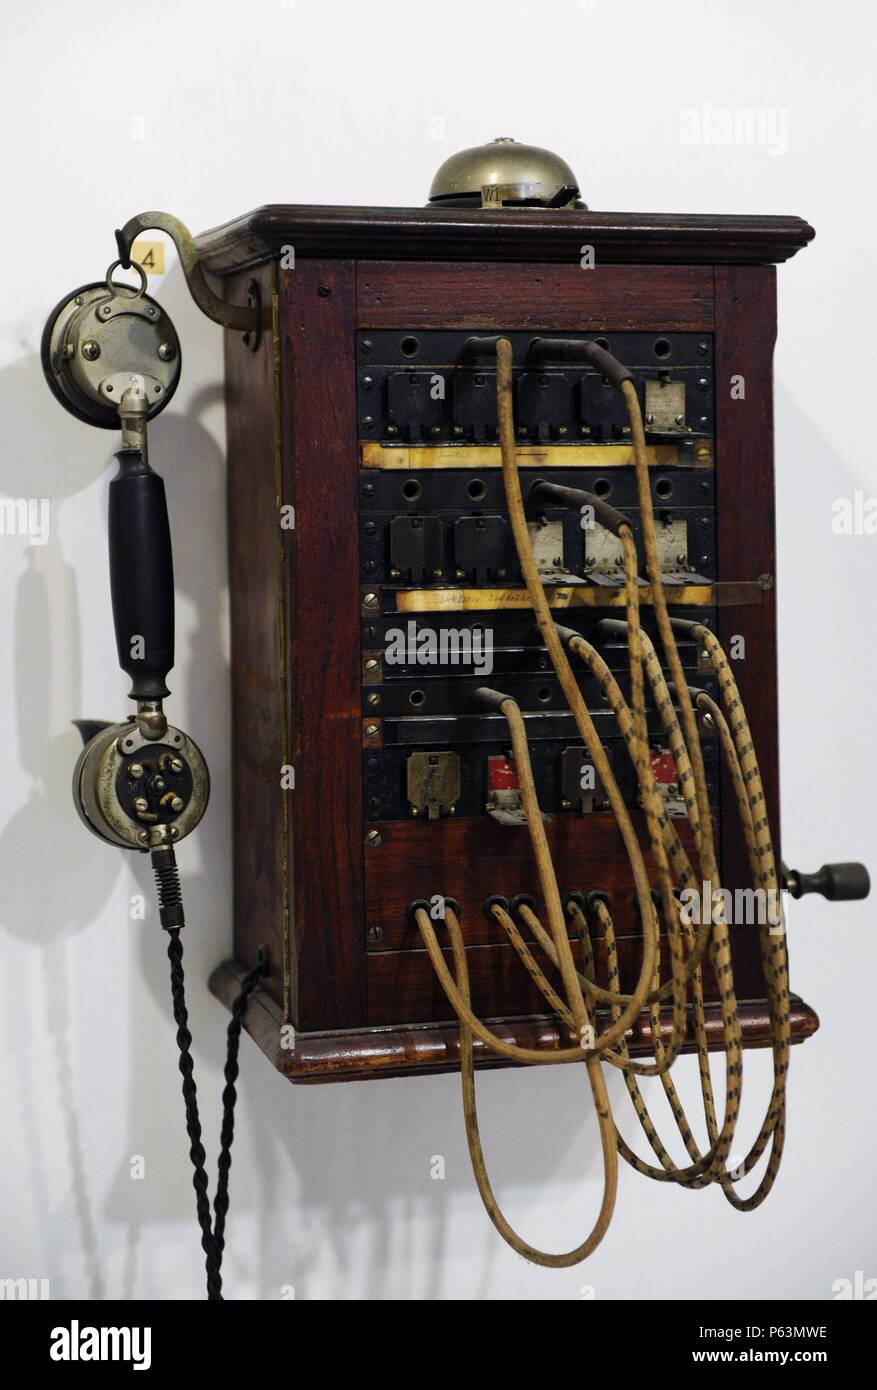 Centralita telefónica alemana, modelo OB O5, año 1905. Deutsches  Technikmuseum. Berlin. Alemania Stock Photo - Alamy